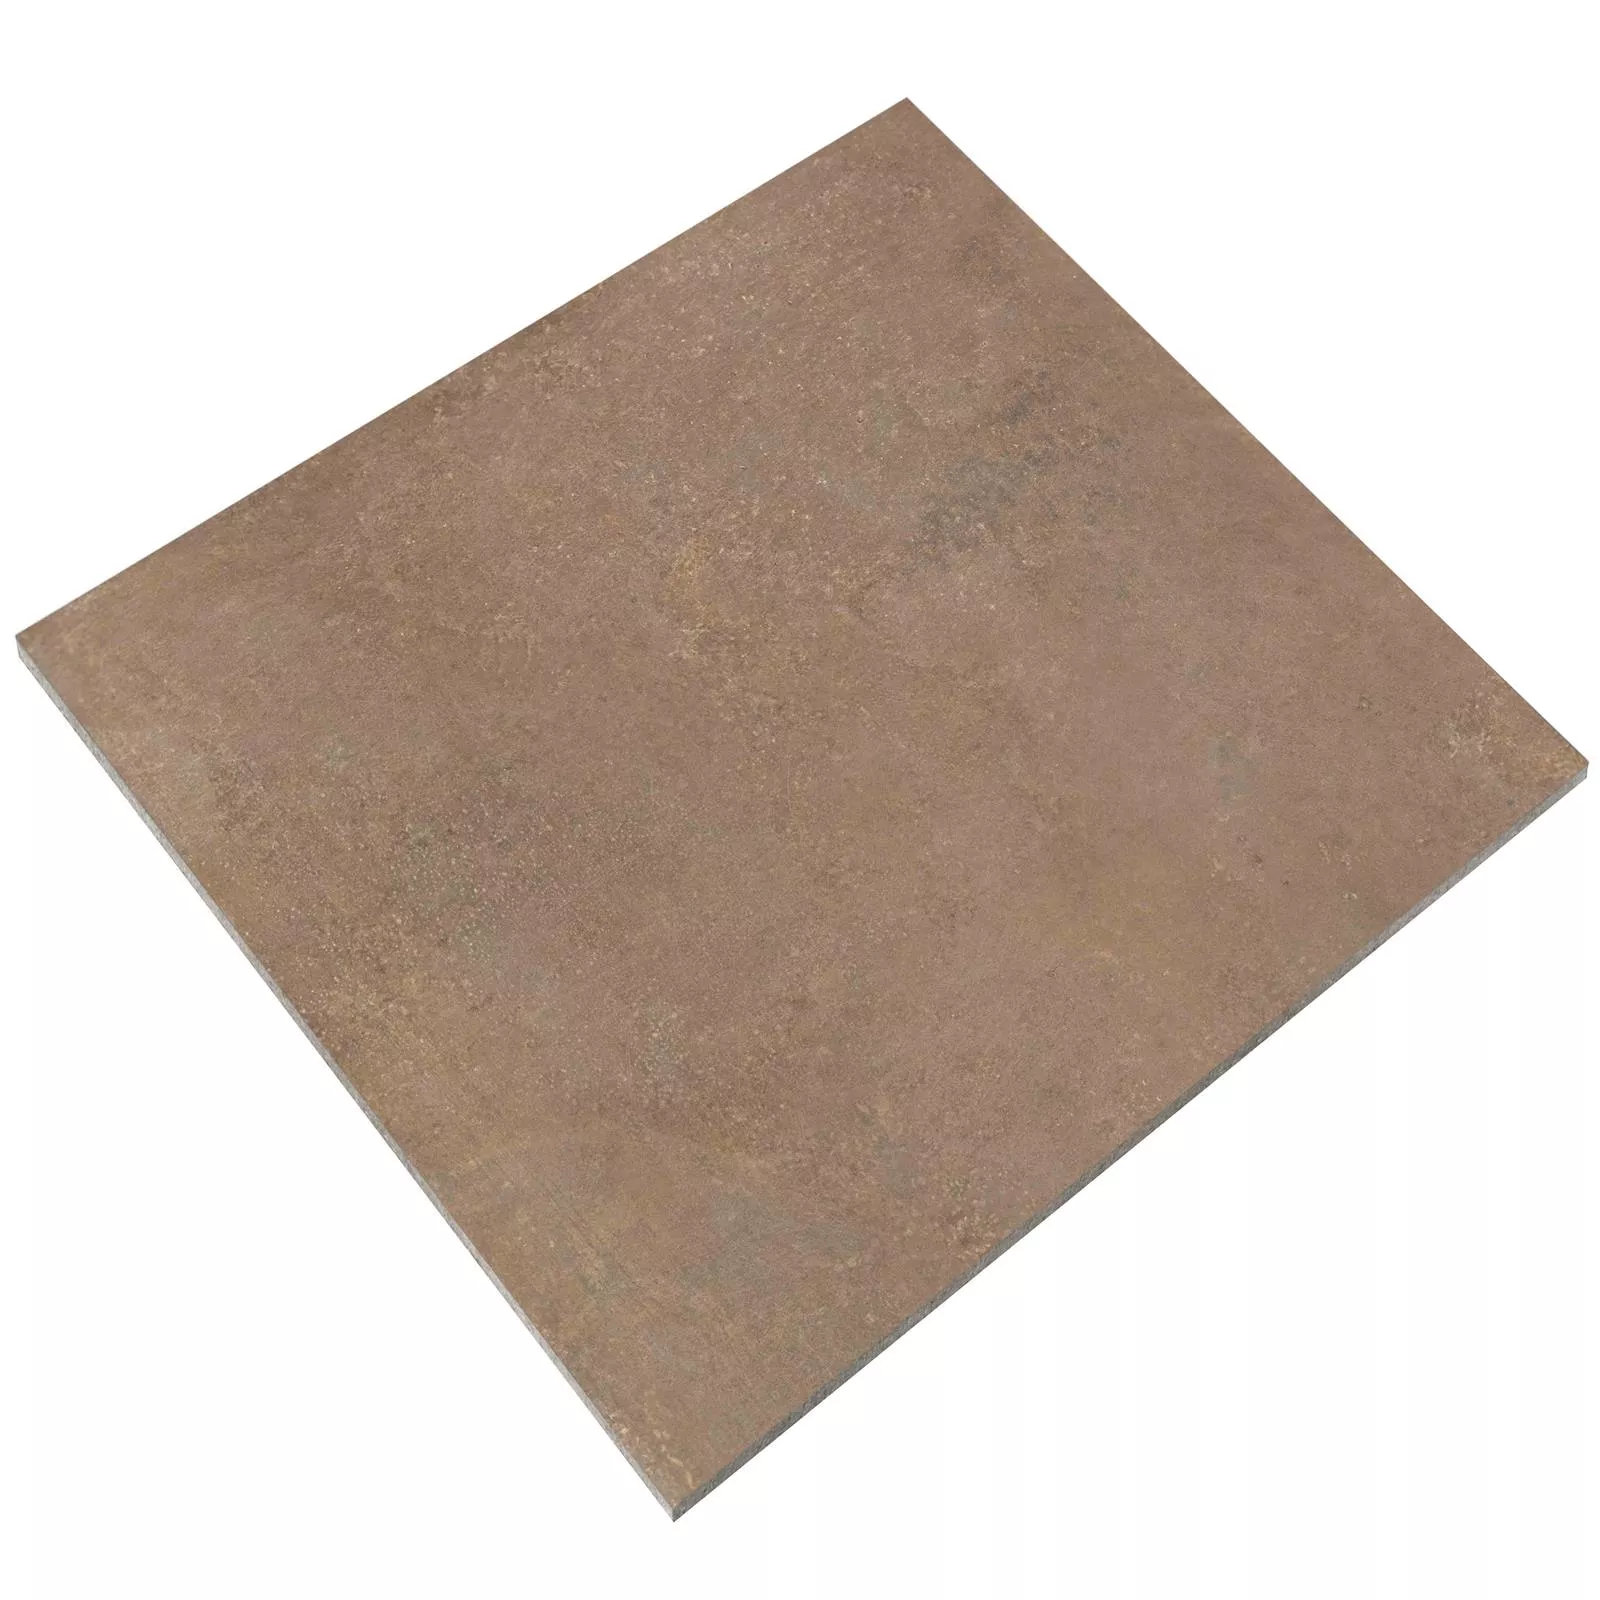 Sample Floor Tiles Peaceway Brown 60x60cm